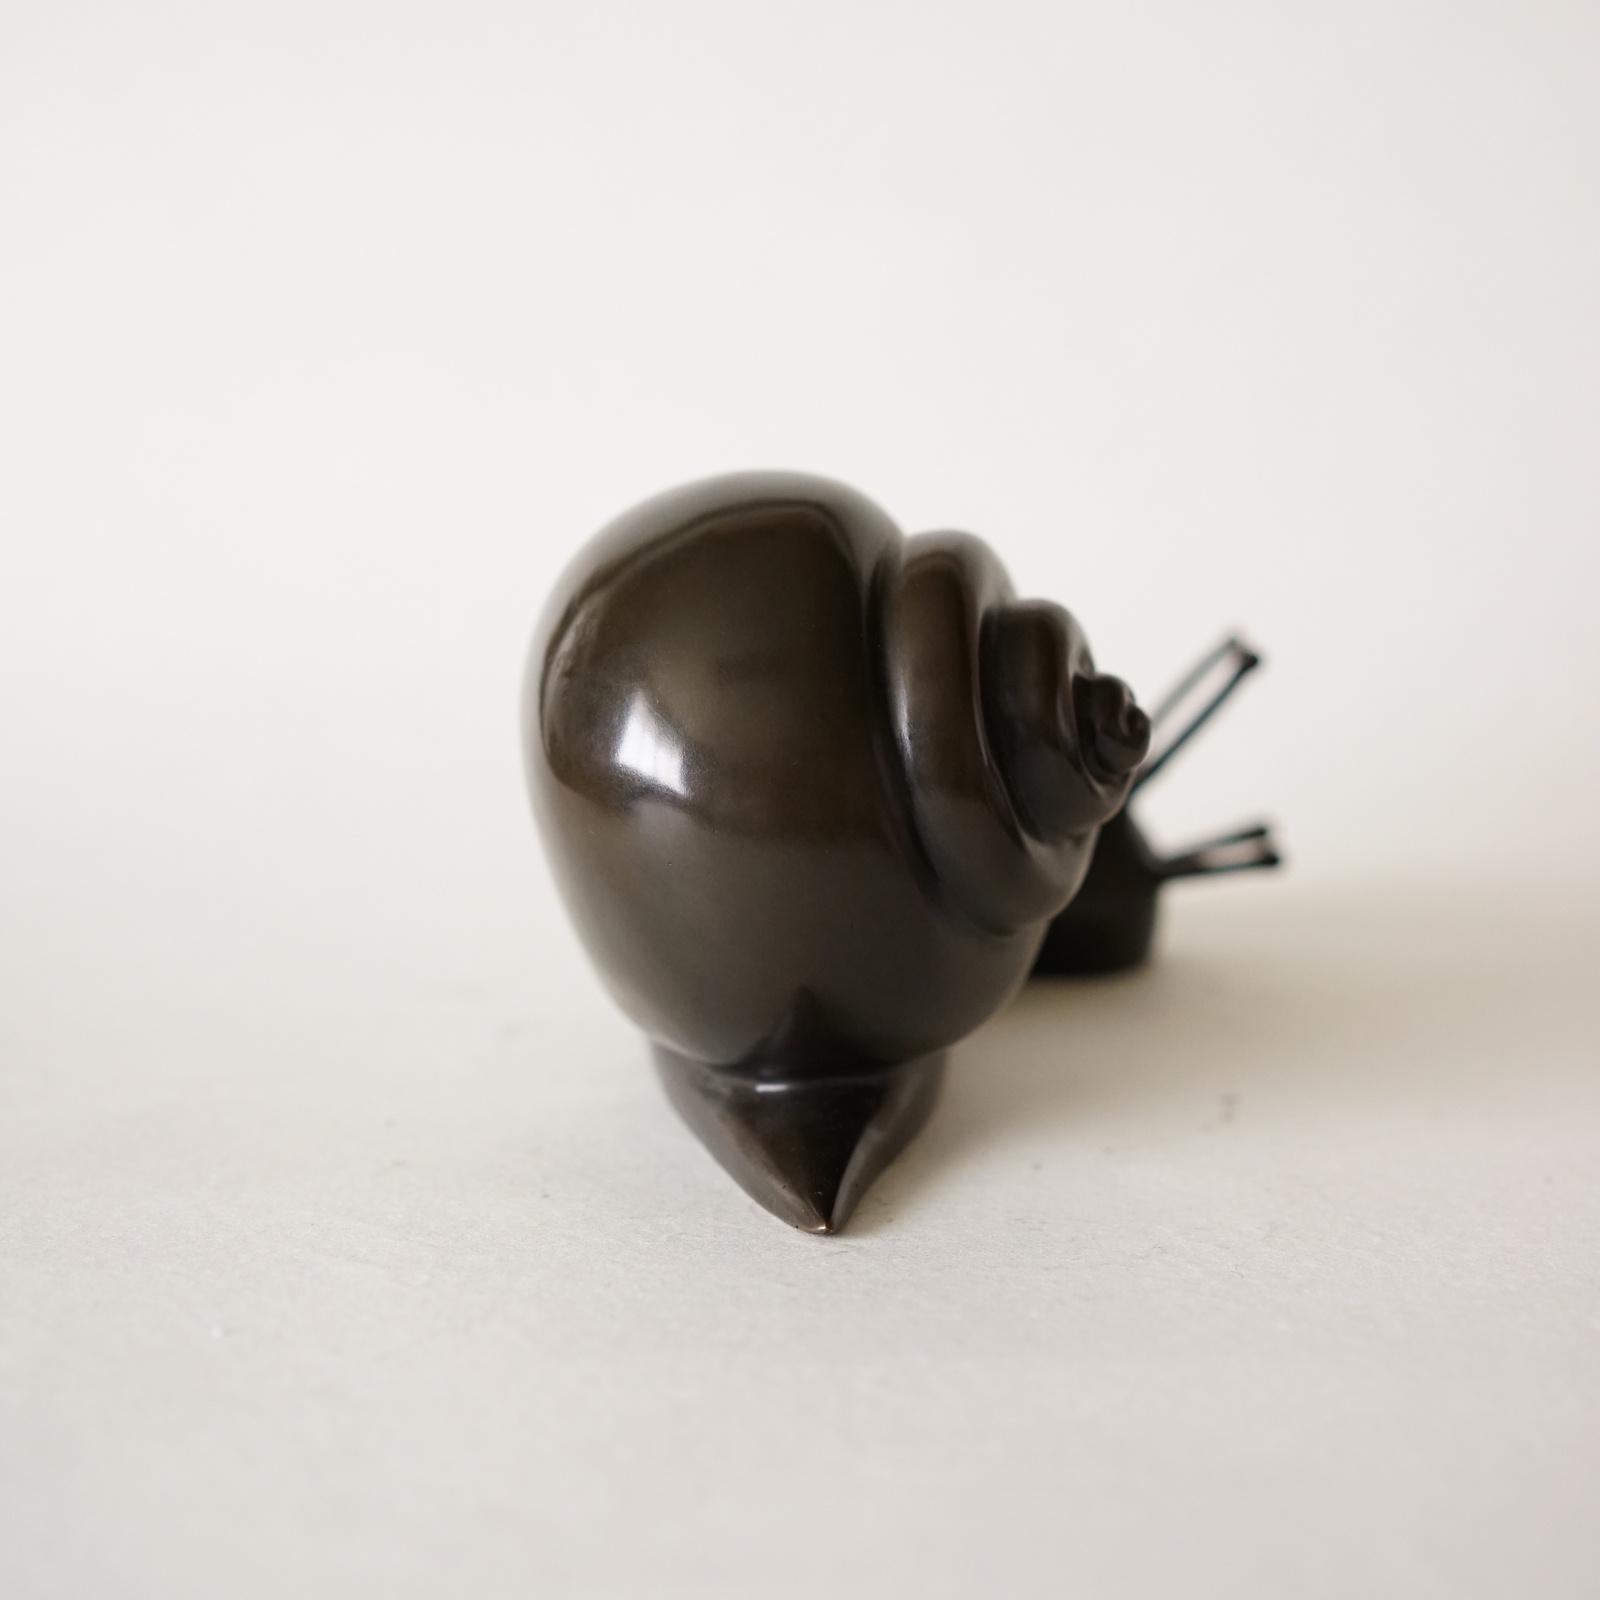 Thai Brass Snail Sculpture by Alexander Lamont For Sale